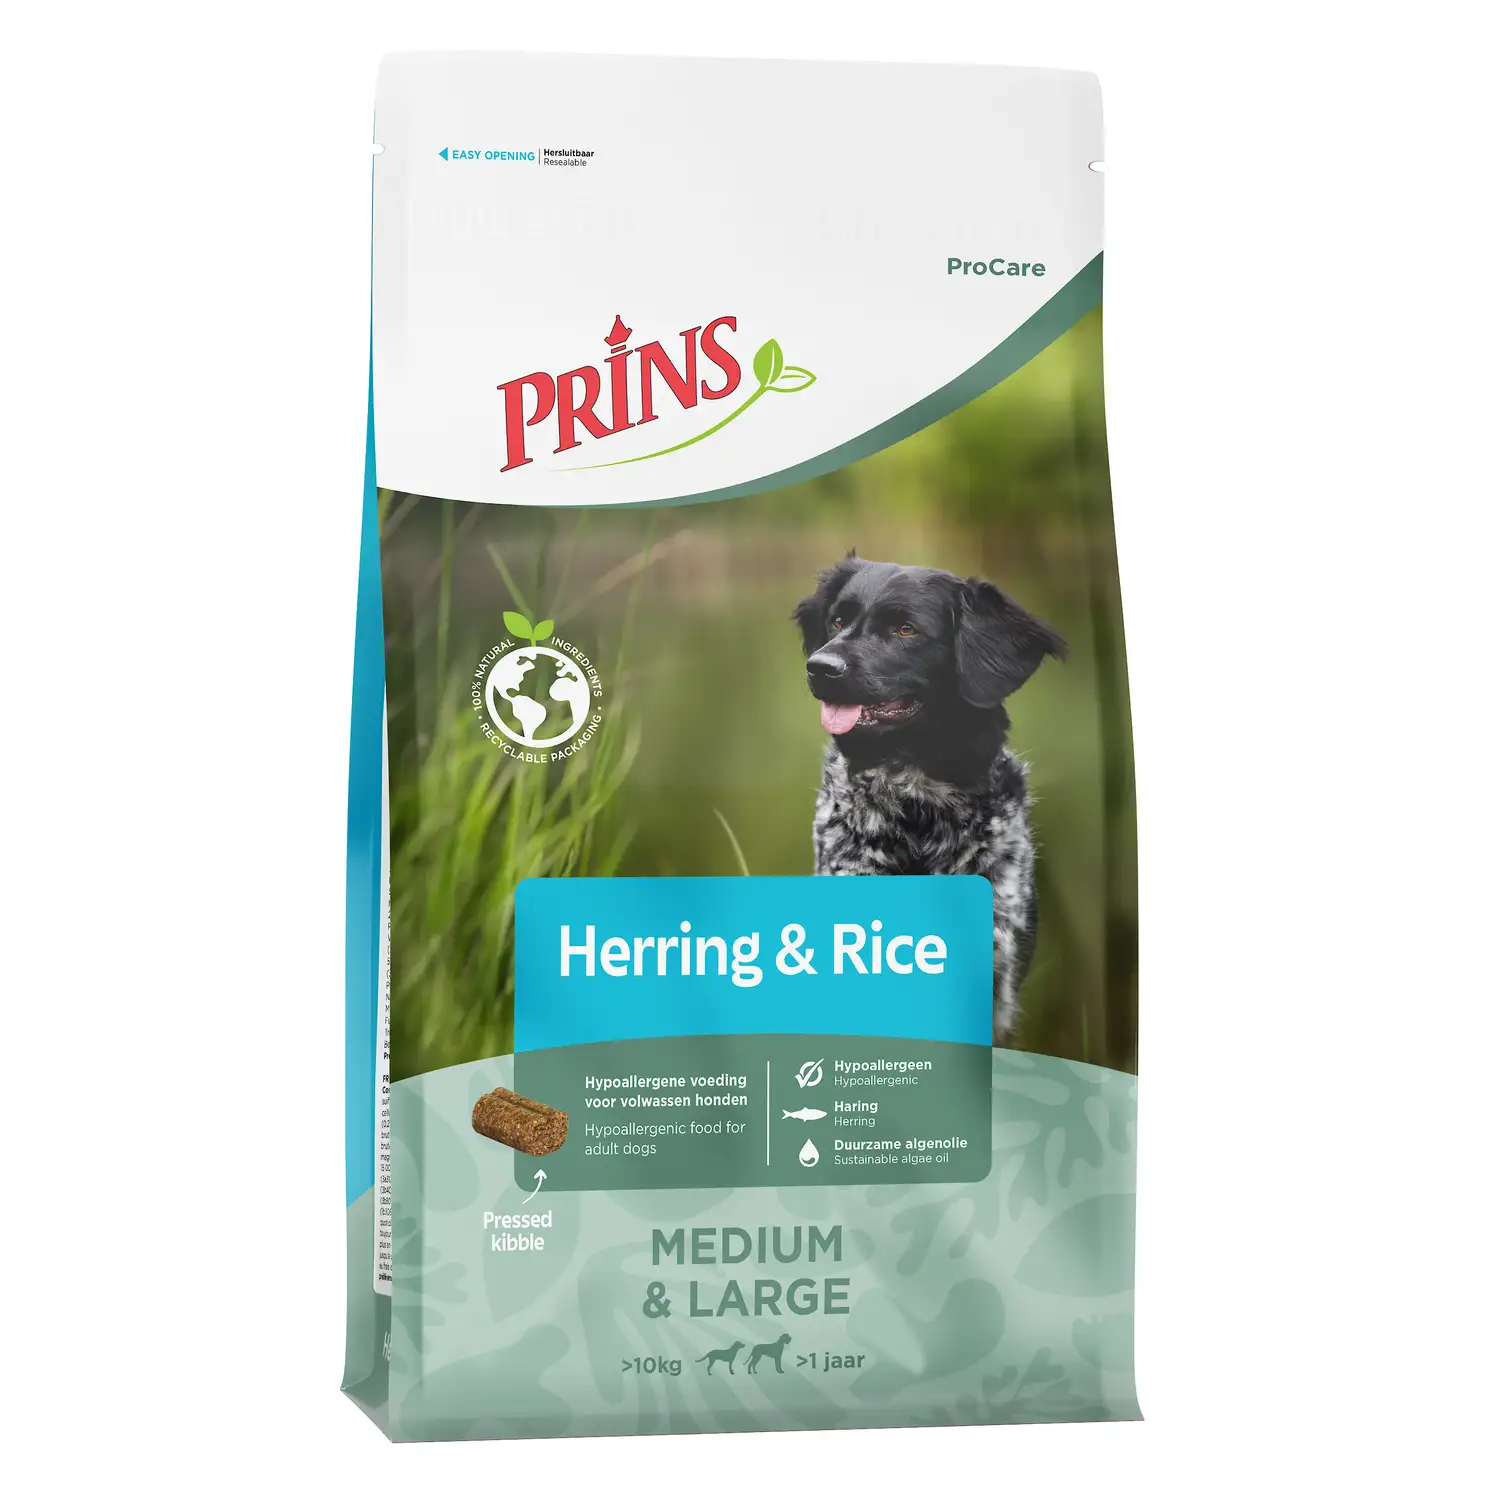 https://storage.googleapis.com/prinspetfoods/products/large/prins-procare-herring-rice.webp